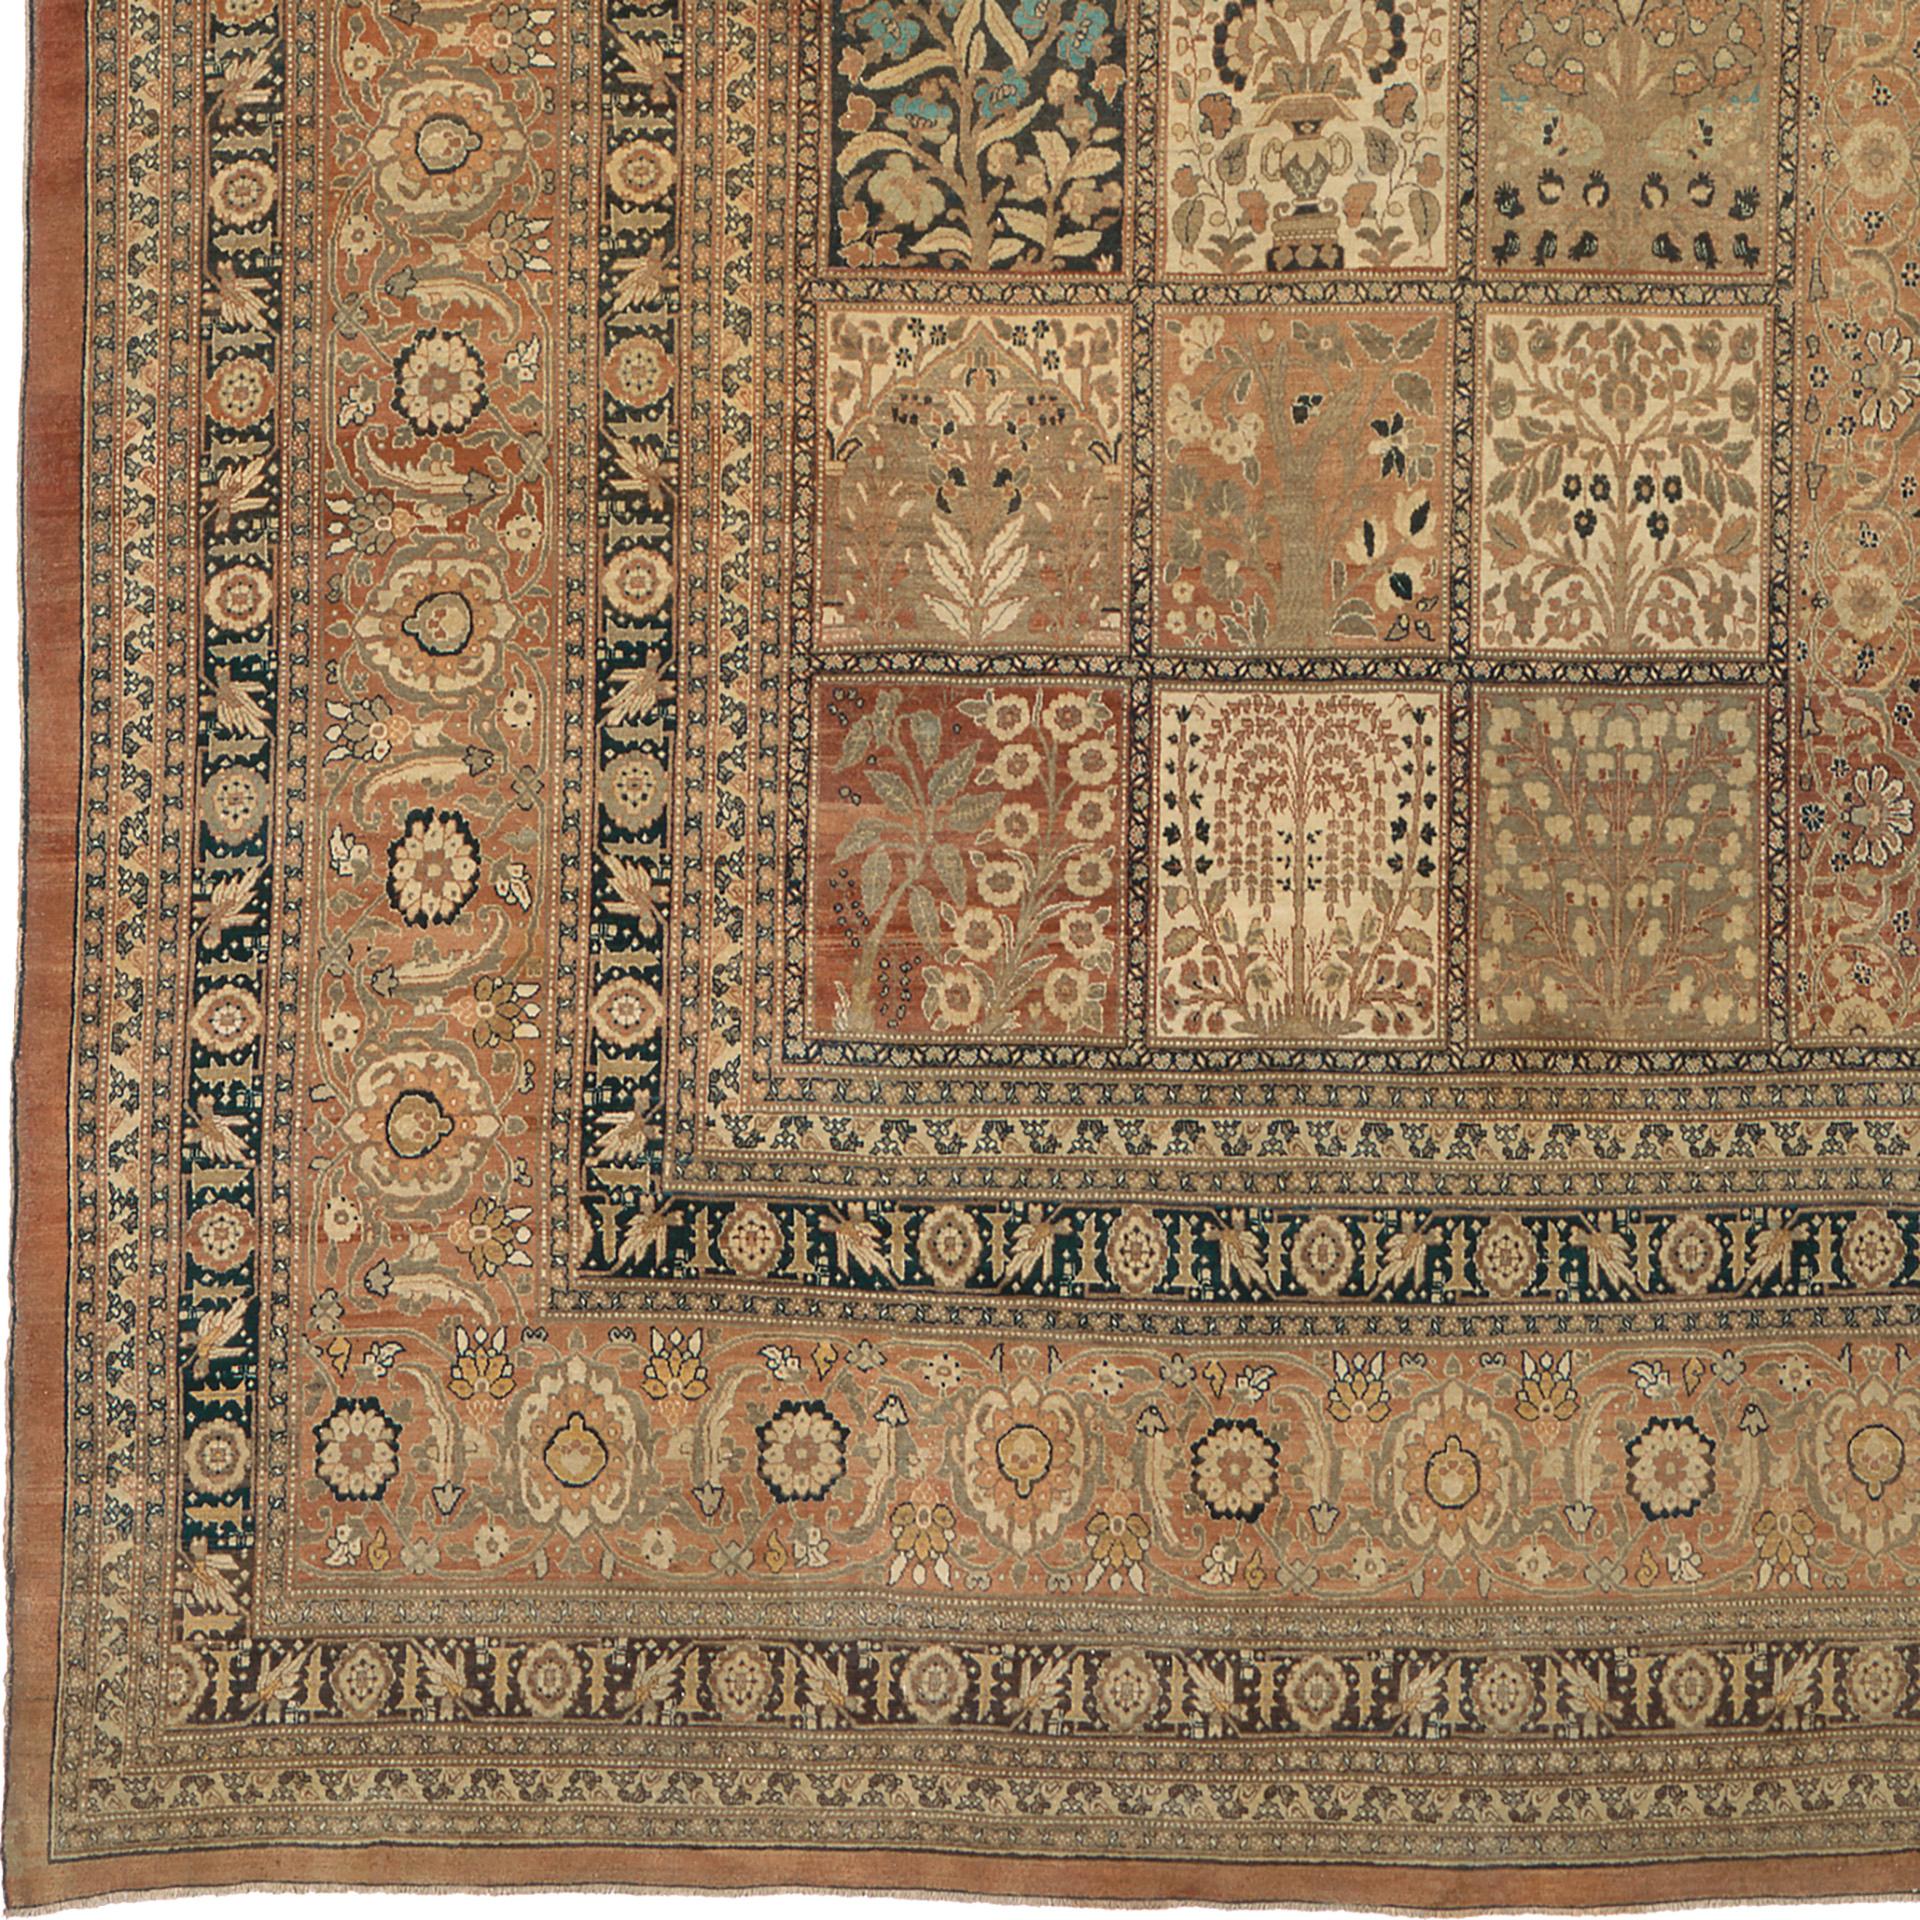 Antique Persian Tabriz rug
Persia circa 1890
Handwoven.